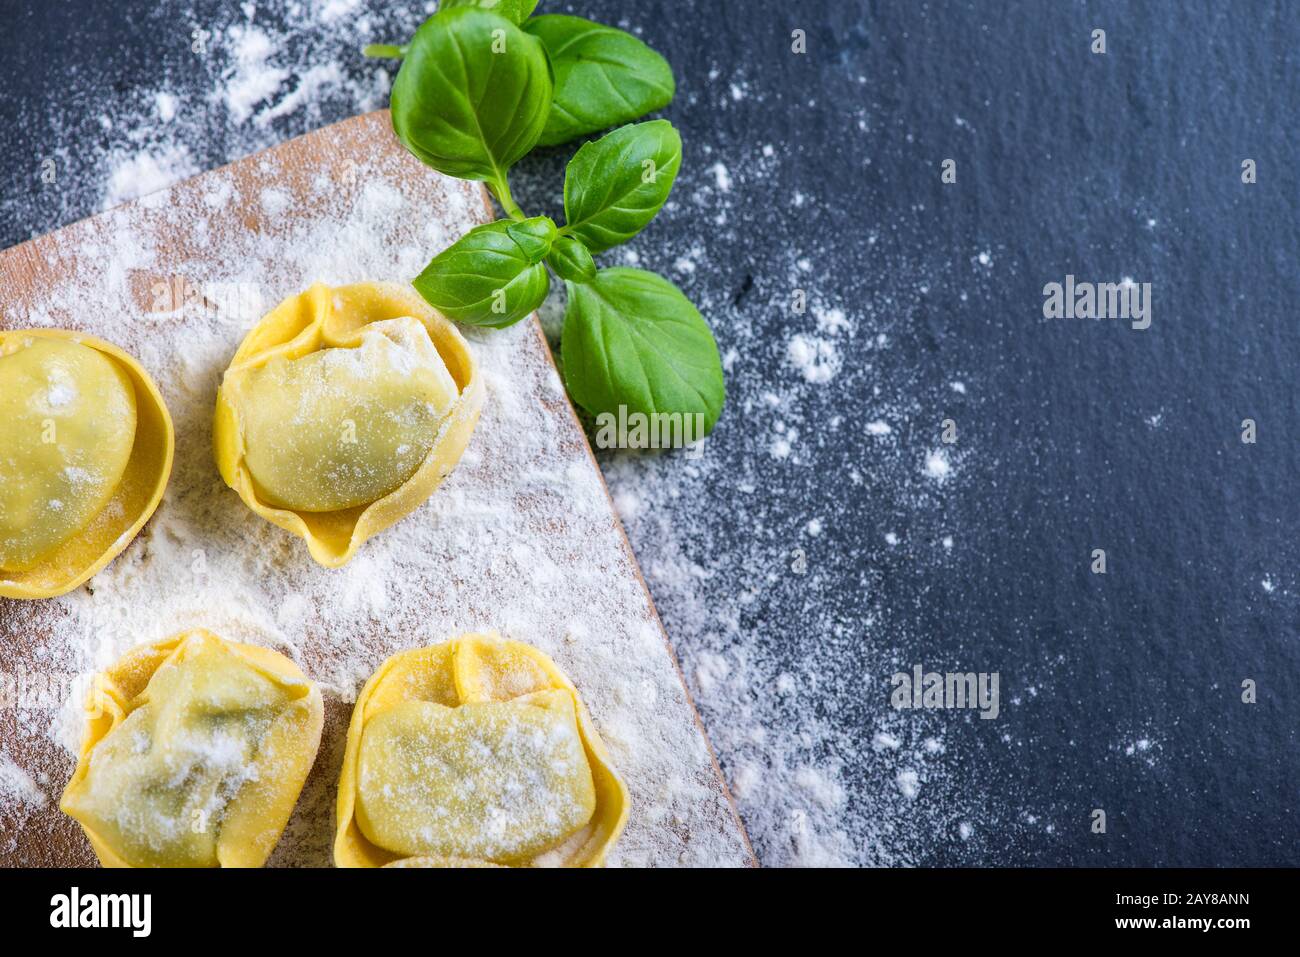 Home cooking, freshly made ravioli italian pasta Stock Photo